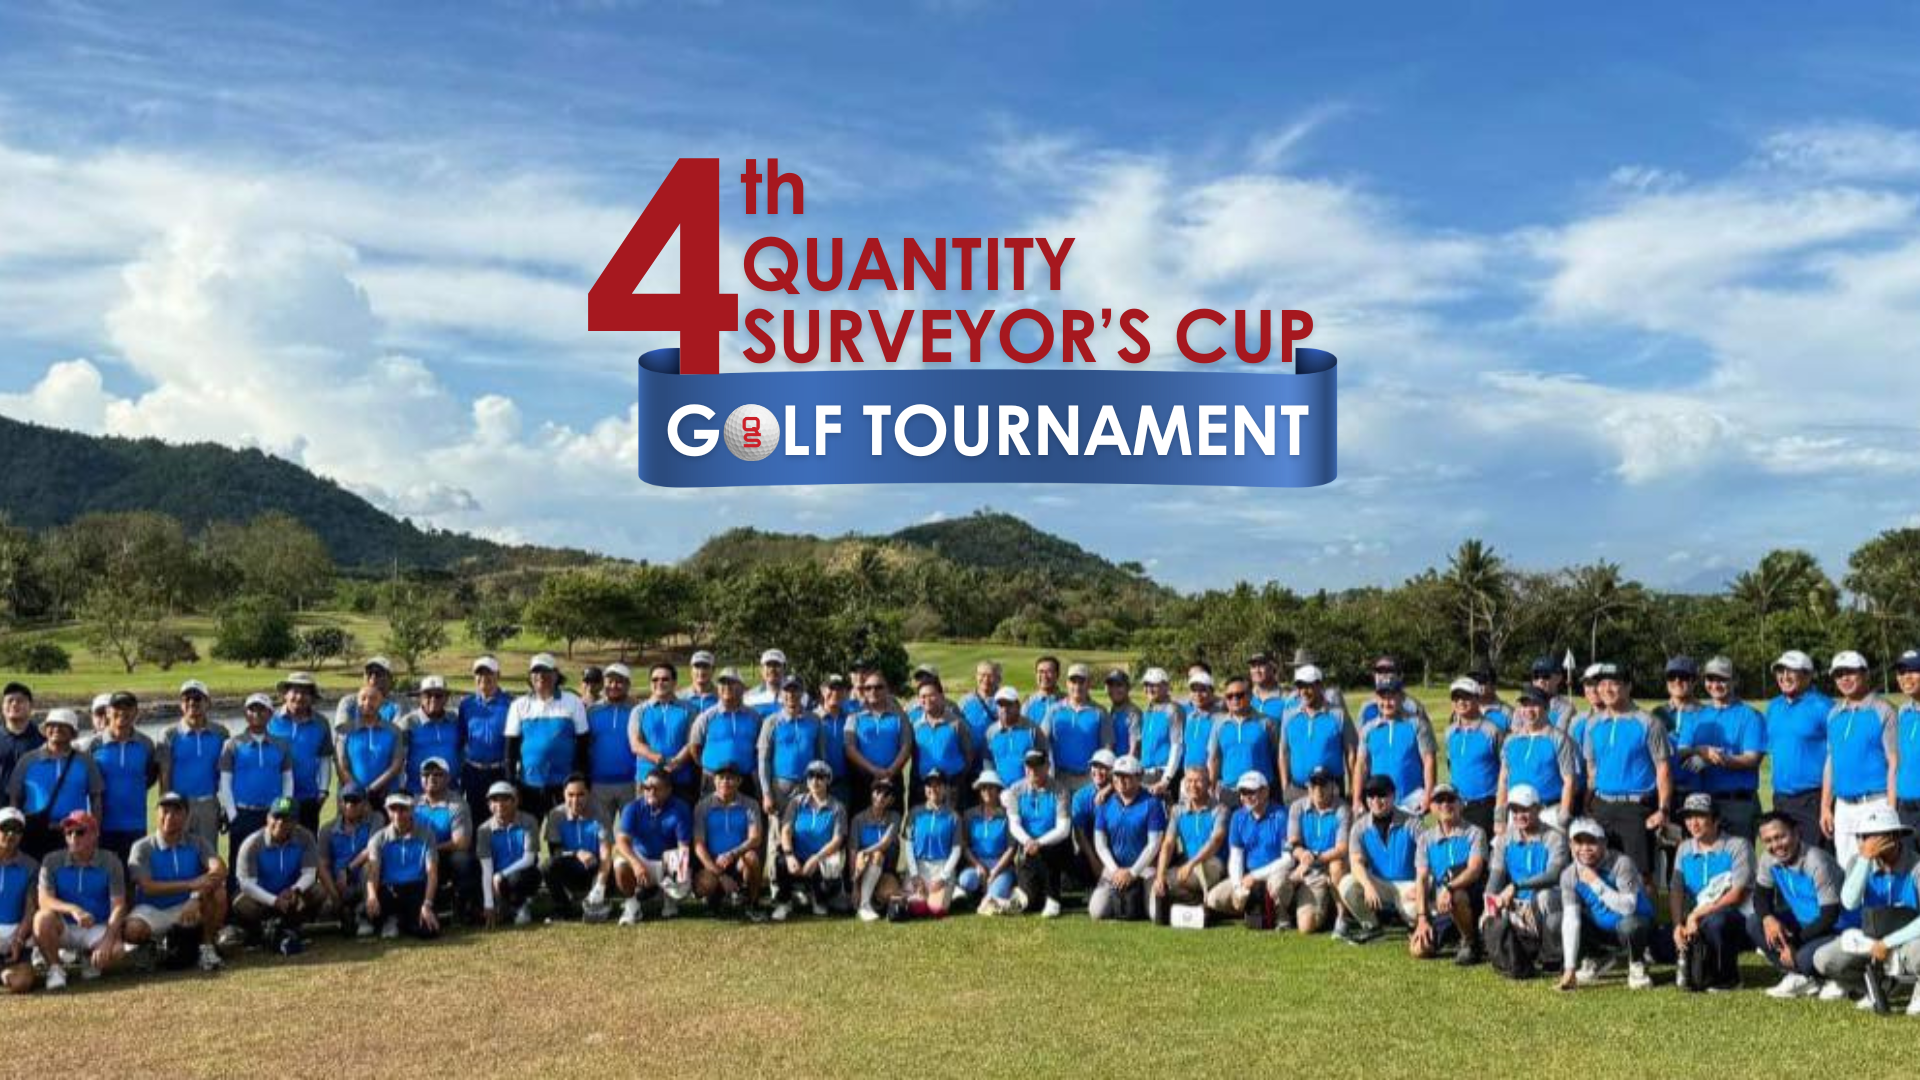 4th Quantity Surveyor’s Cup - Golf Tournament